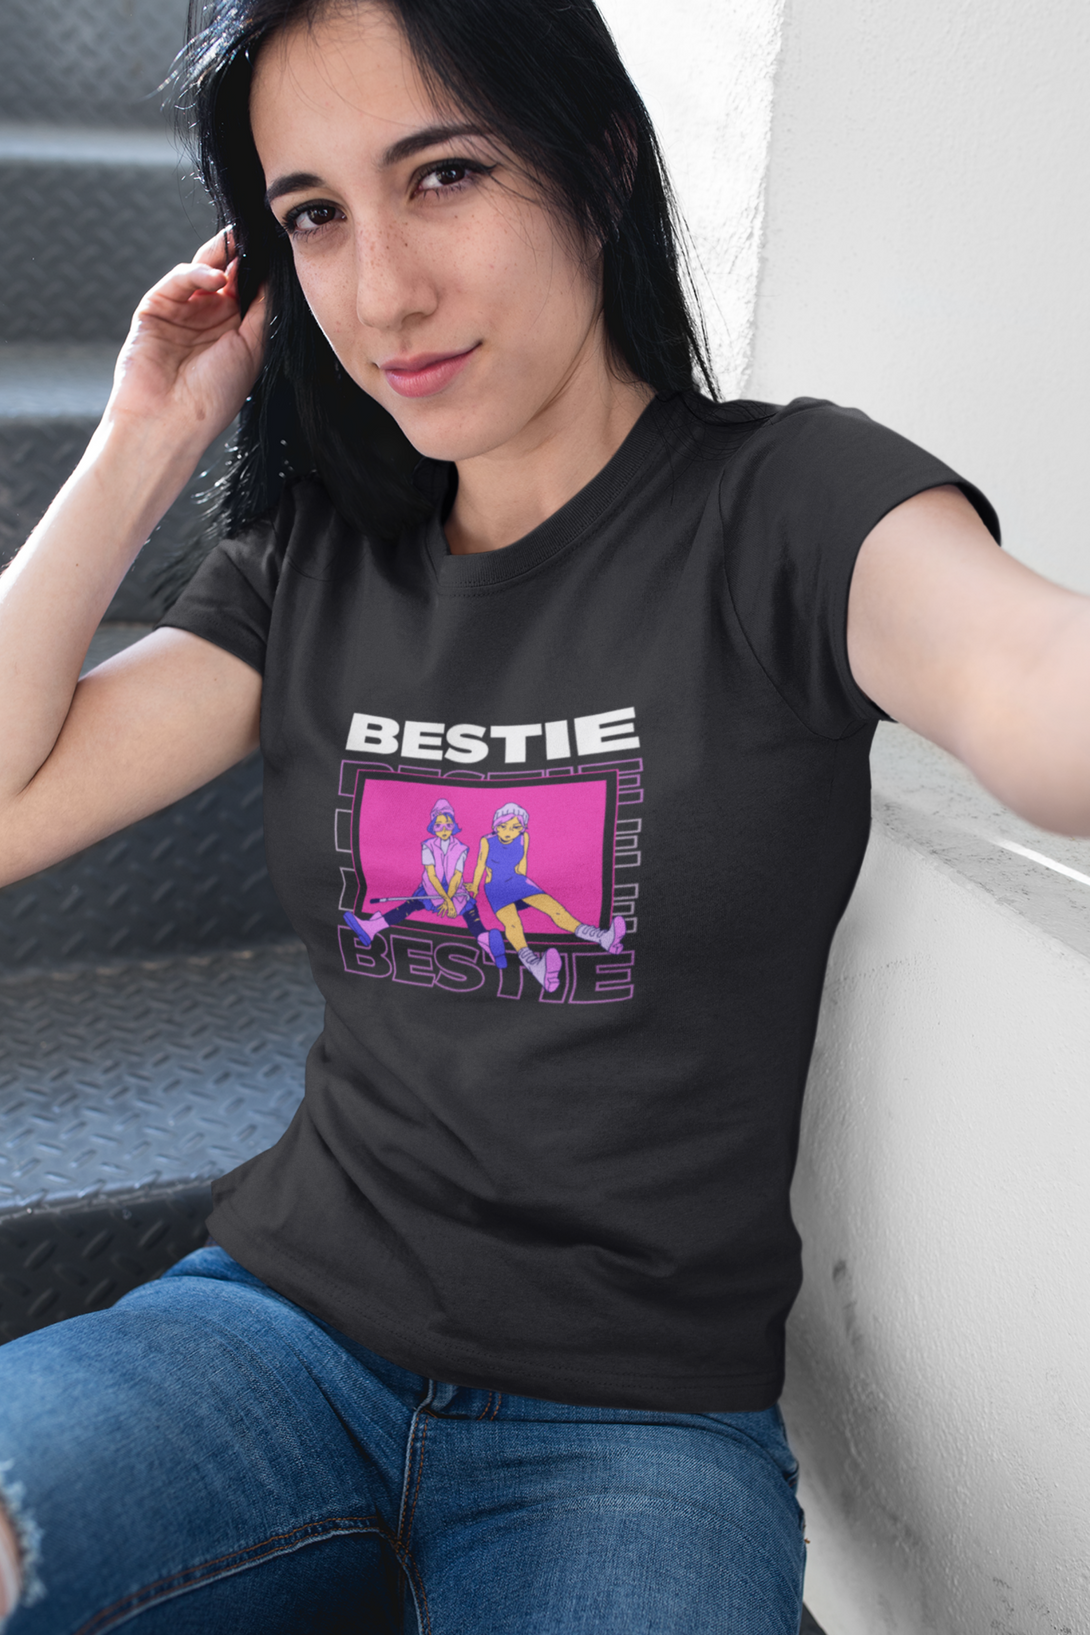 Bestie Bliss Printed T-Shirt For Women - WowWaves - 4